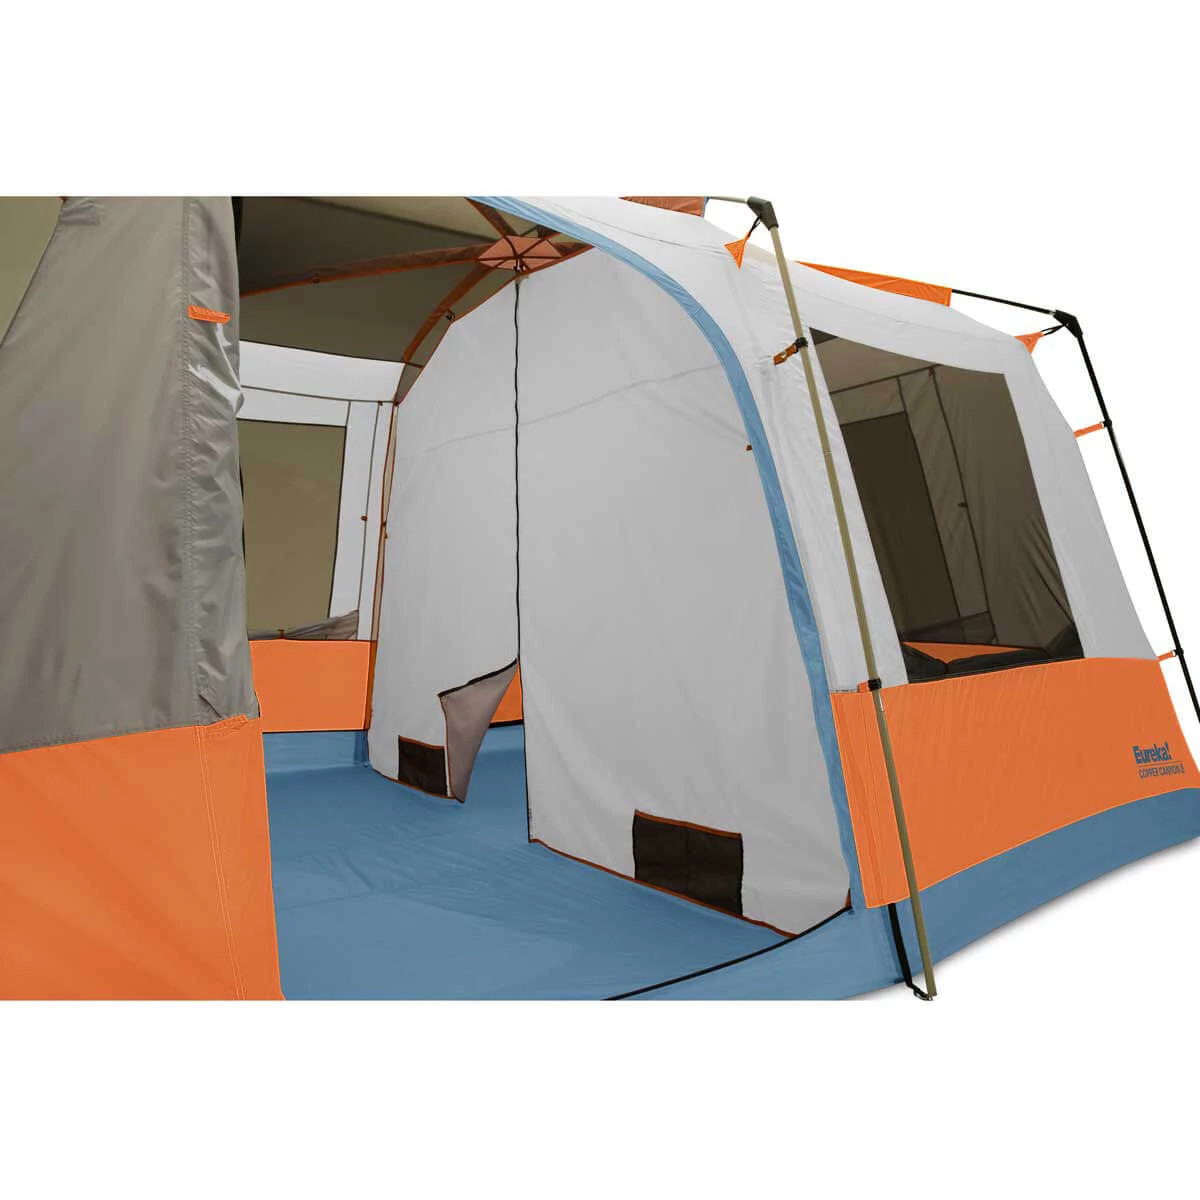 Eureka! Copper Canyon LX 6-Person, 3 Season Camping Tent 141［並行